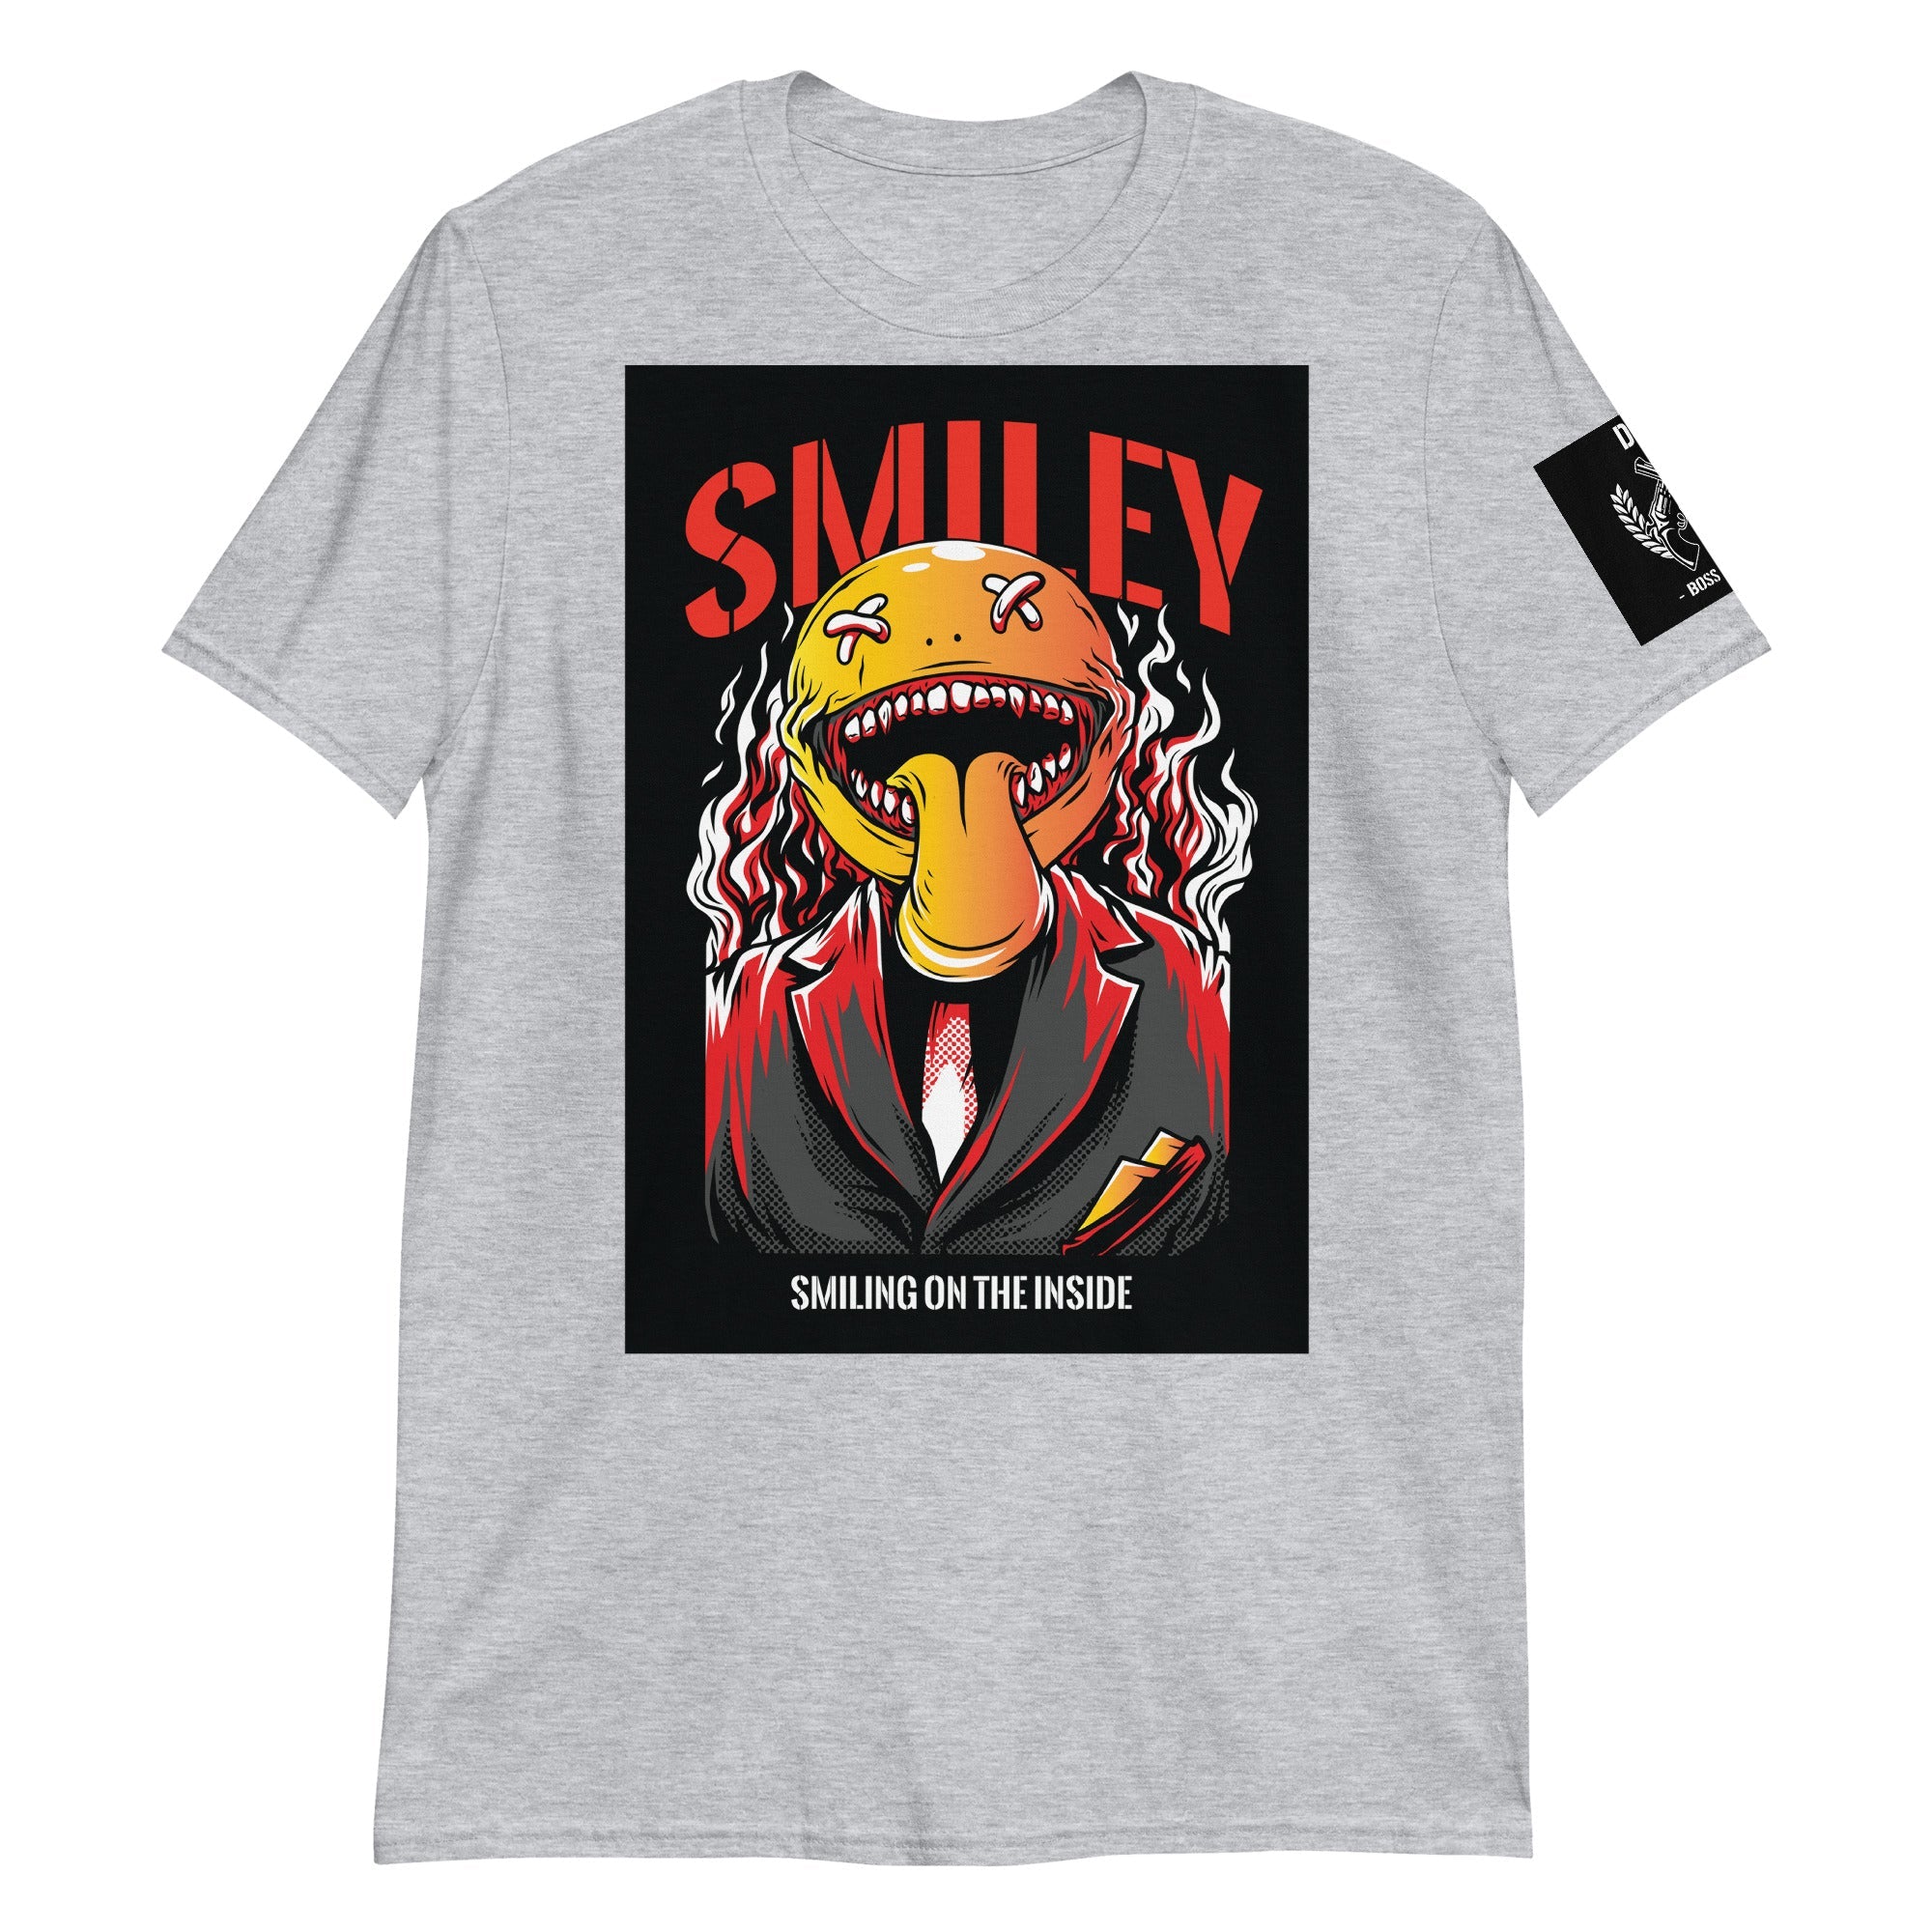 Men's Graphic T-Shirt - SMILEY - Gamer Tee - Men's Graphic T-Shirt - DRAGON FOXX™ - 6382885_503 - Sport Grey - S - Dragon Foxx™ - Dragon Foxx™ Gamer T-Shirt - Gamer Tee